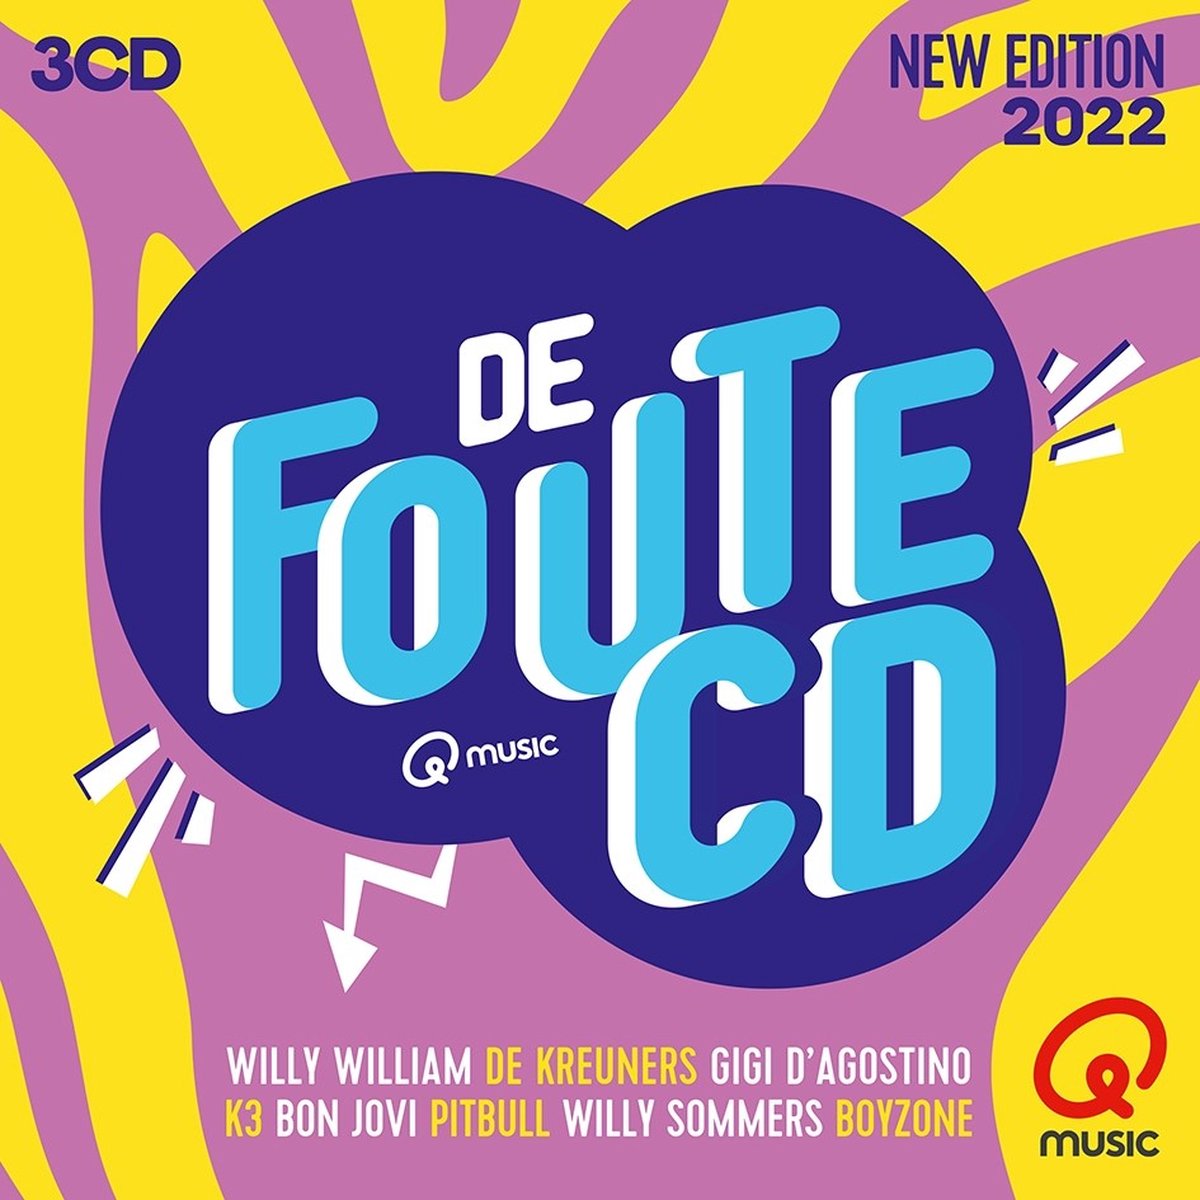 Various Artists - De Foute Cd Van Qmusic (2022) (3 CD) - various artists